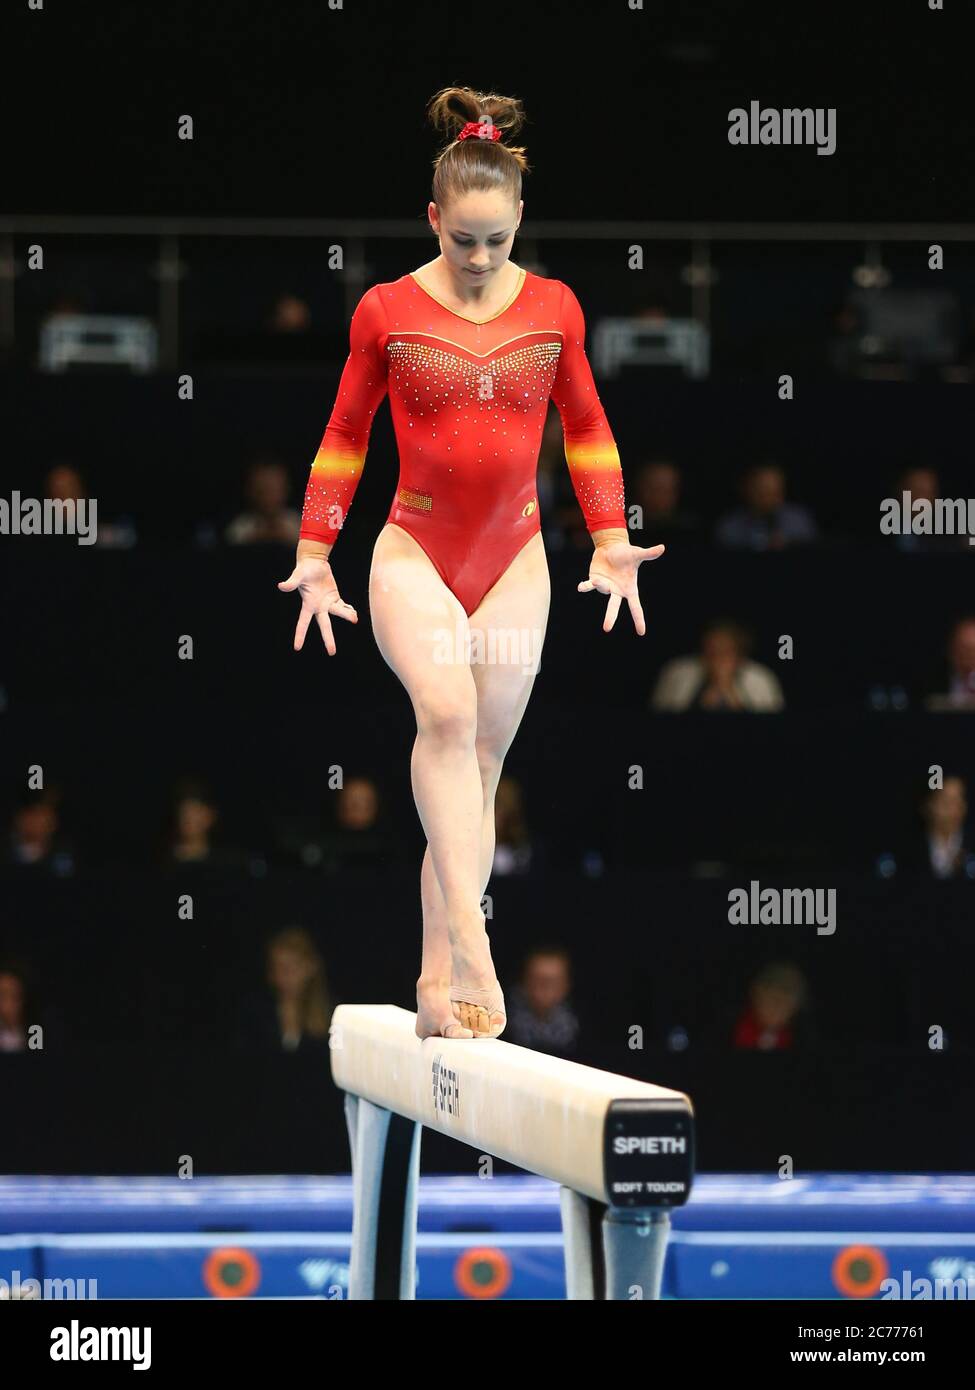 Szczecin, Poland, April 11, 2019:Helena Bonilla of Spain competes on the balance beam during the European championship Stock Photo